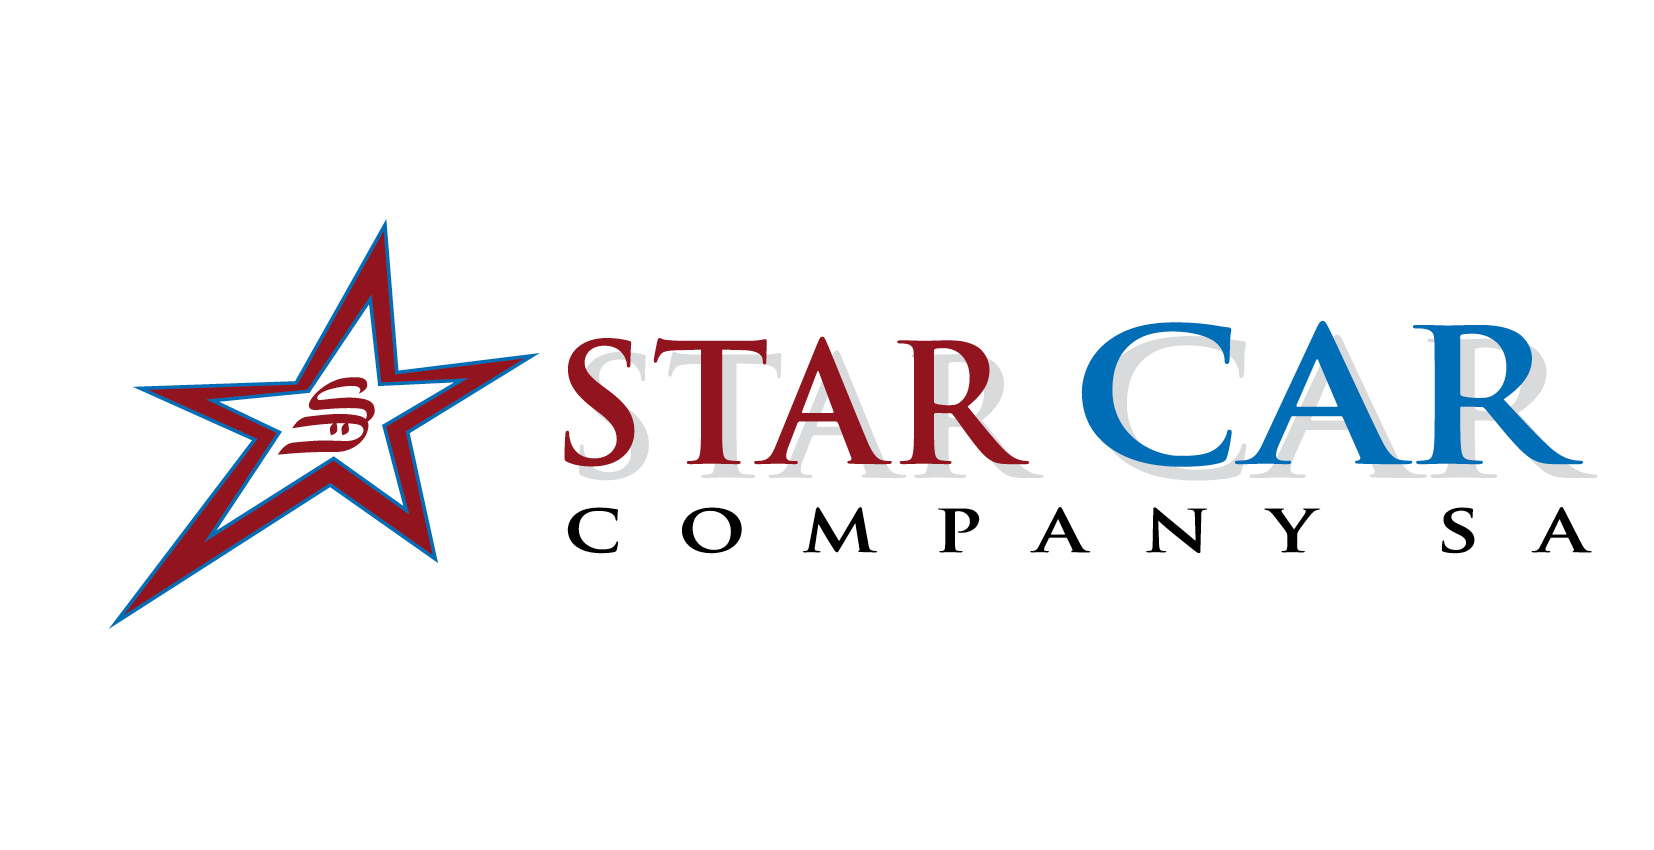 Star car company logo